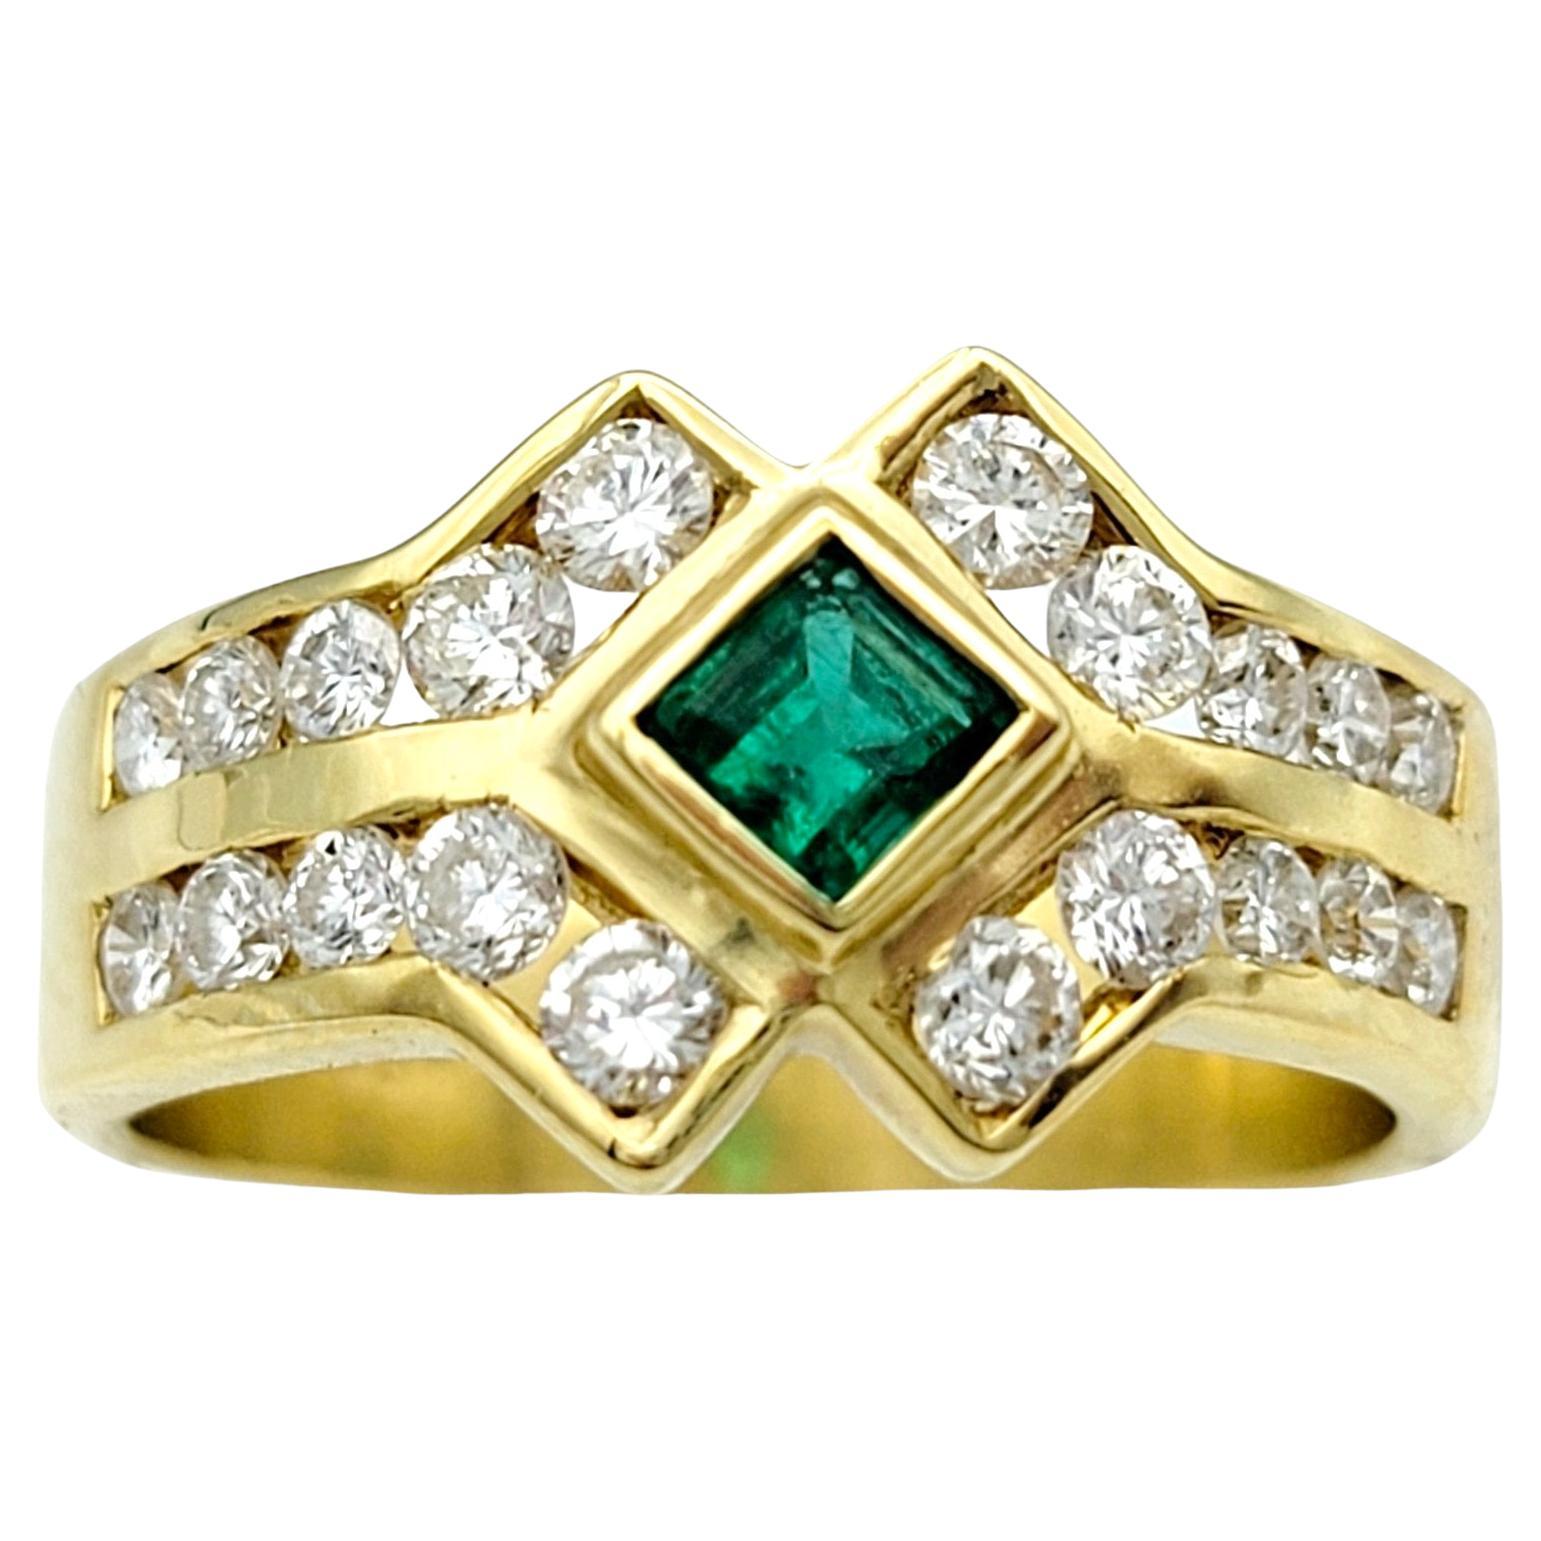 Princess Cut Emerald and Round Diamond Multi Row Band Ring in 18 Karat Gold